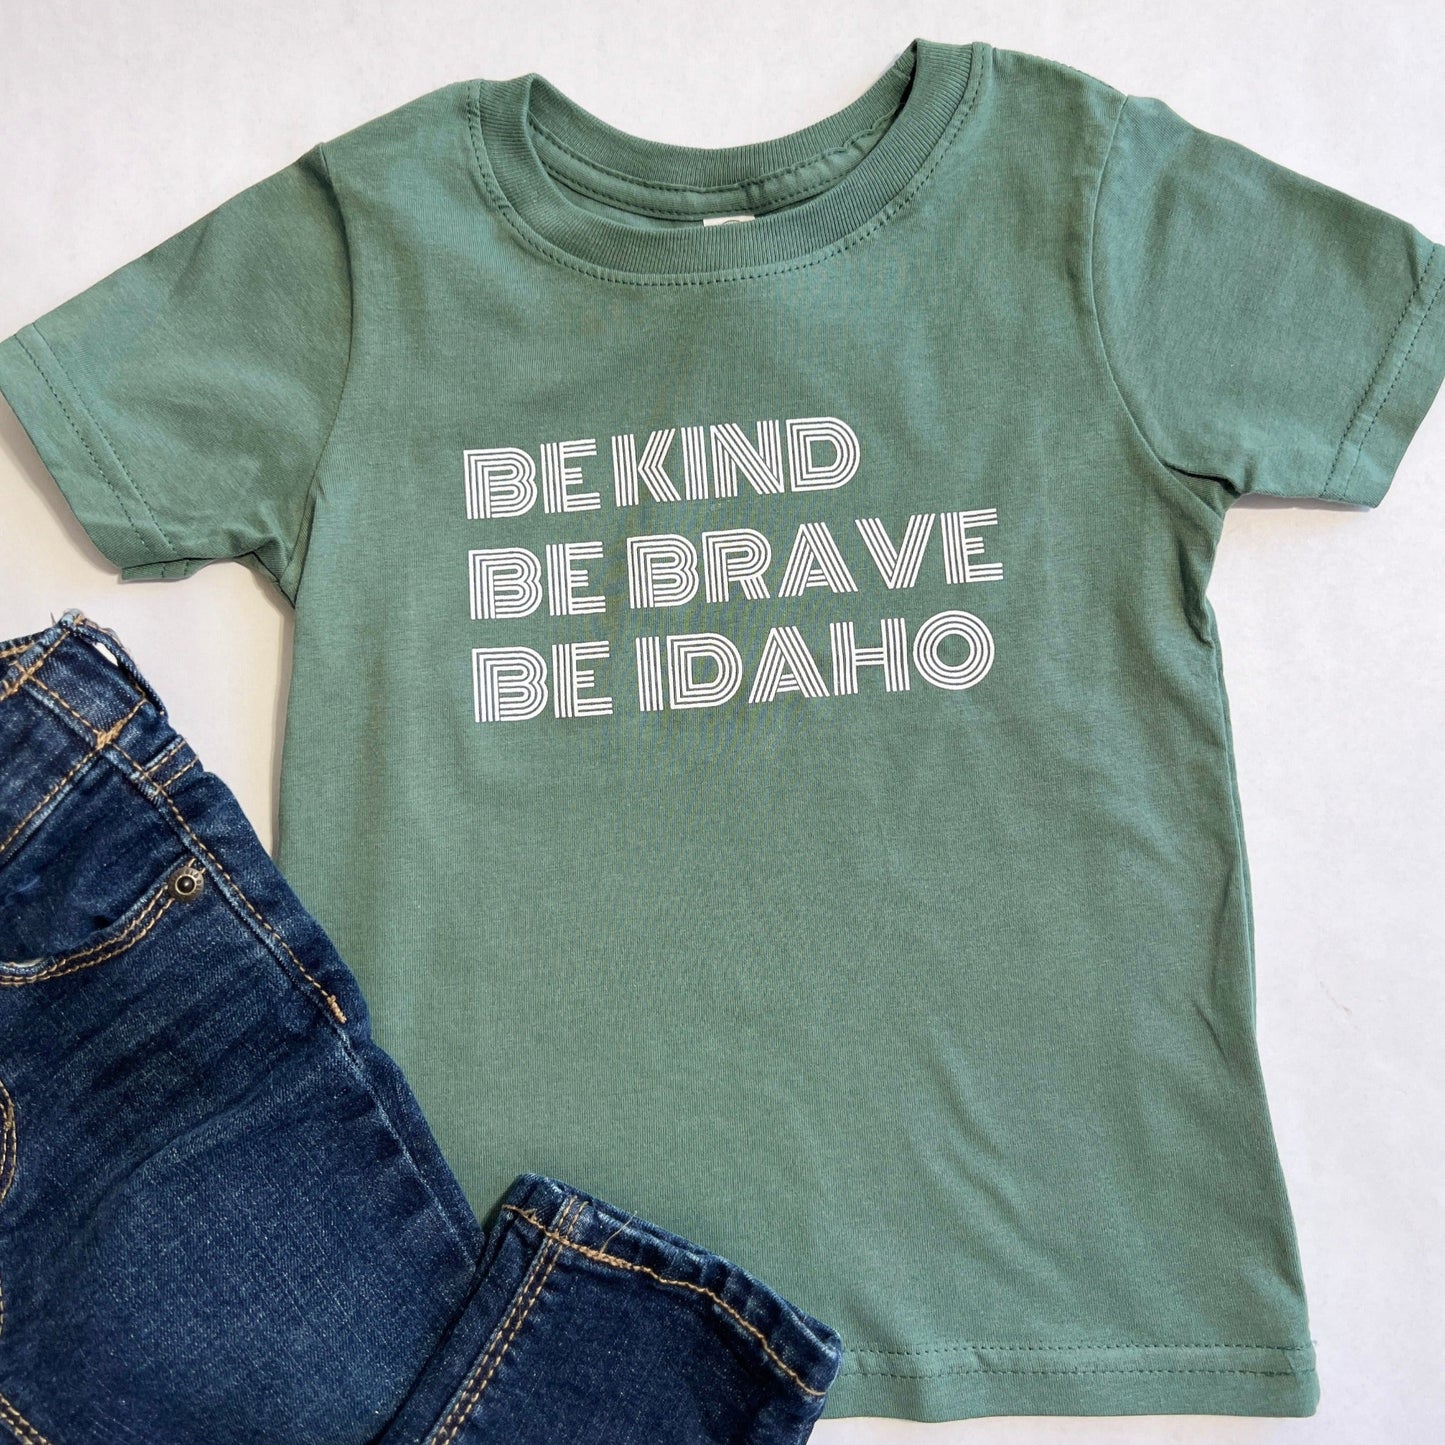 Idaho t Shirts, apparel for Idaho Kids. Apparel for Idahoans. This idaho T shirt says Be Kind, Be Brave, Be Idaho. It's focus is to bring love and kindness to Idaho. 